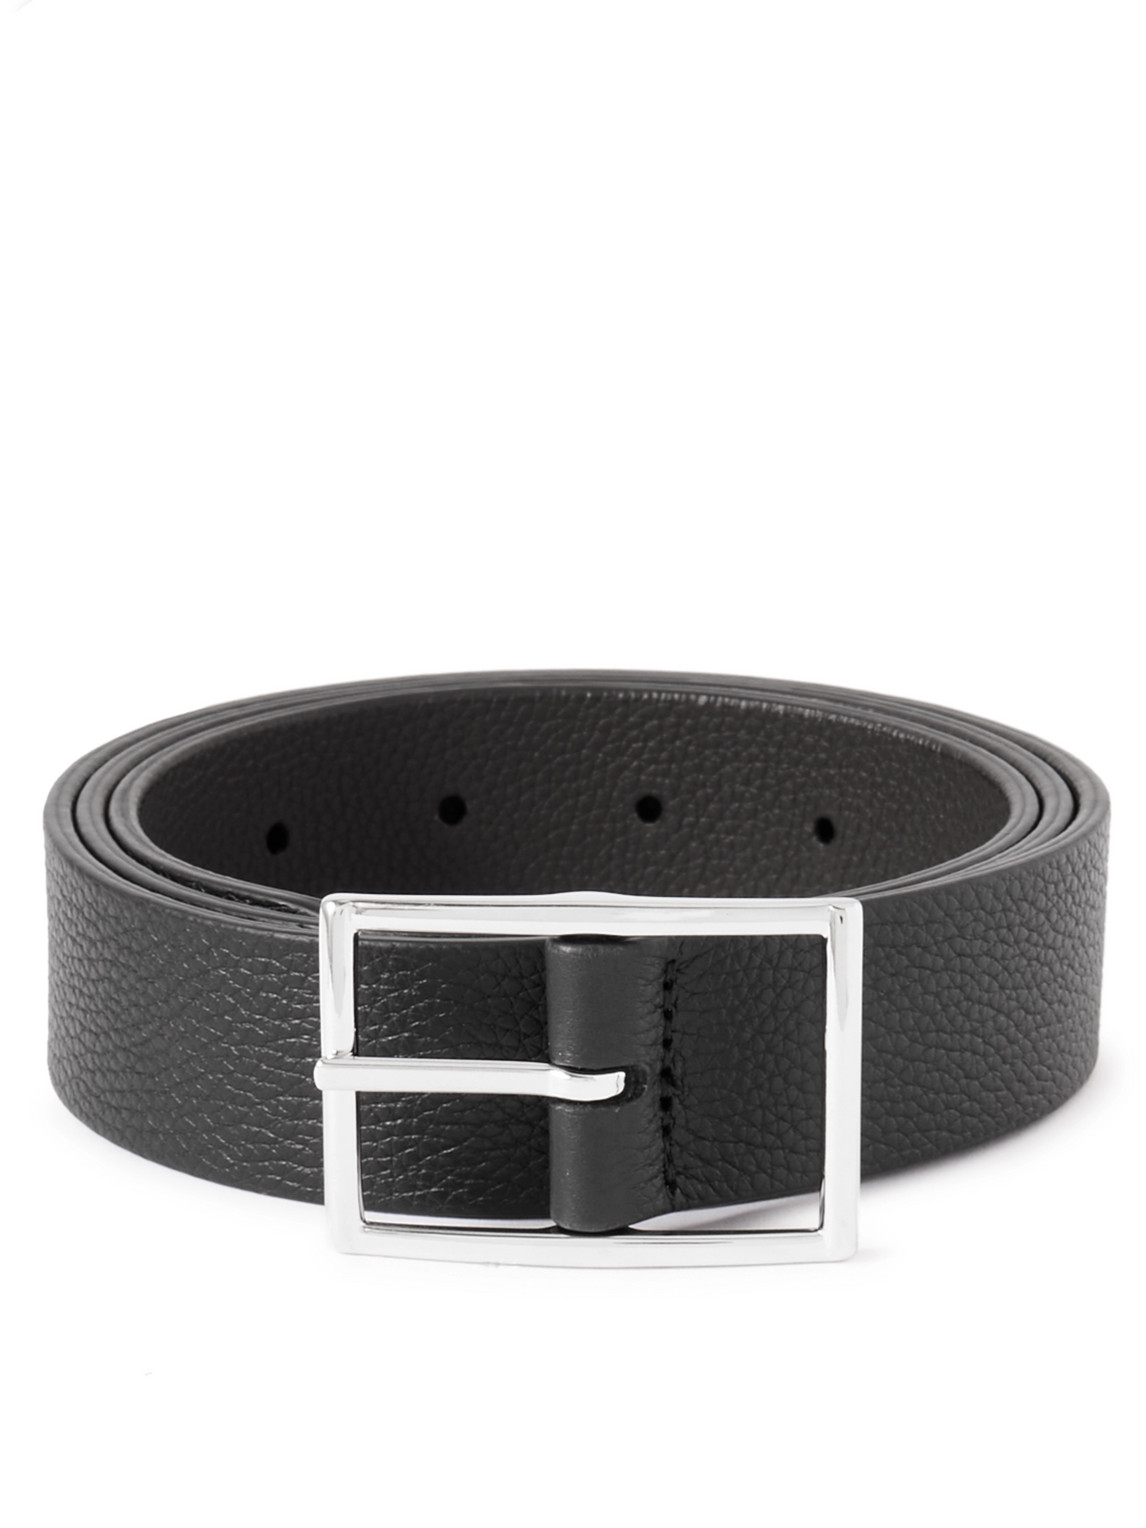 Anderson's 3cm Reversible Full-grain Leather Belt In Black